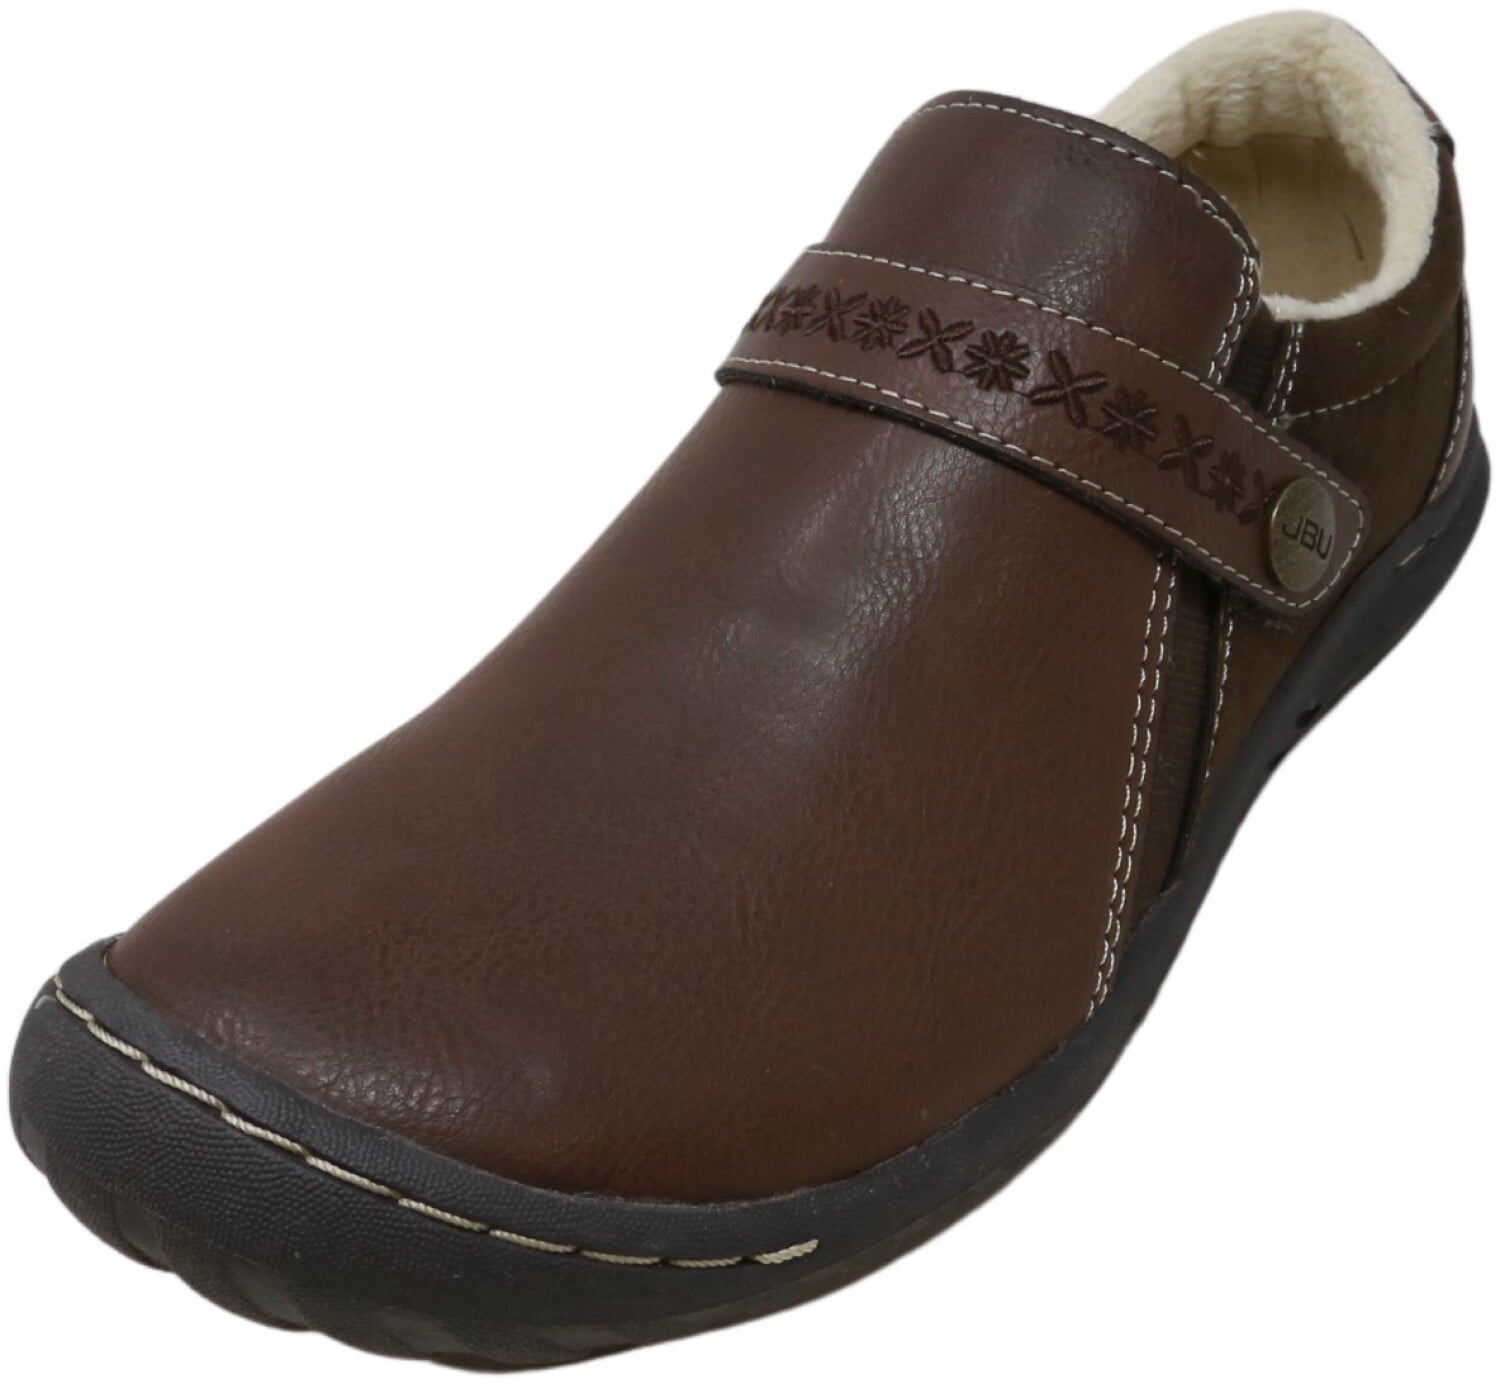 jambu leather shoes